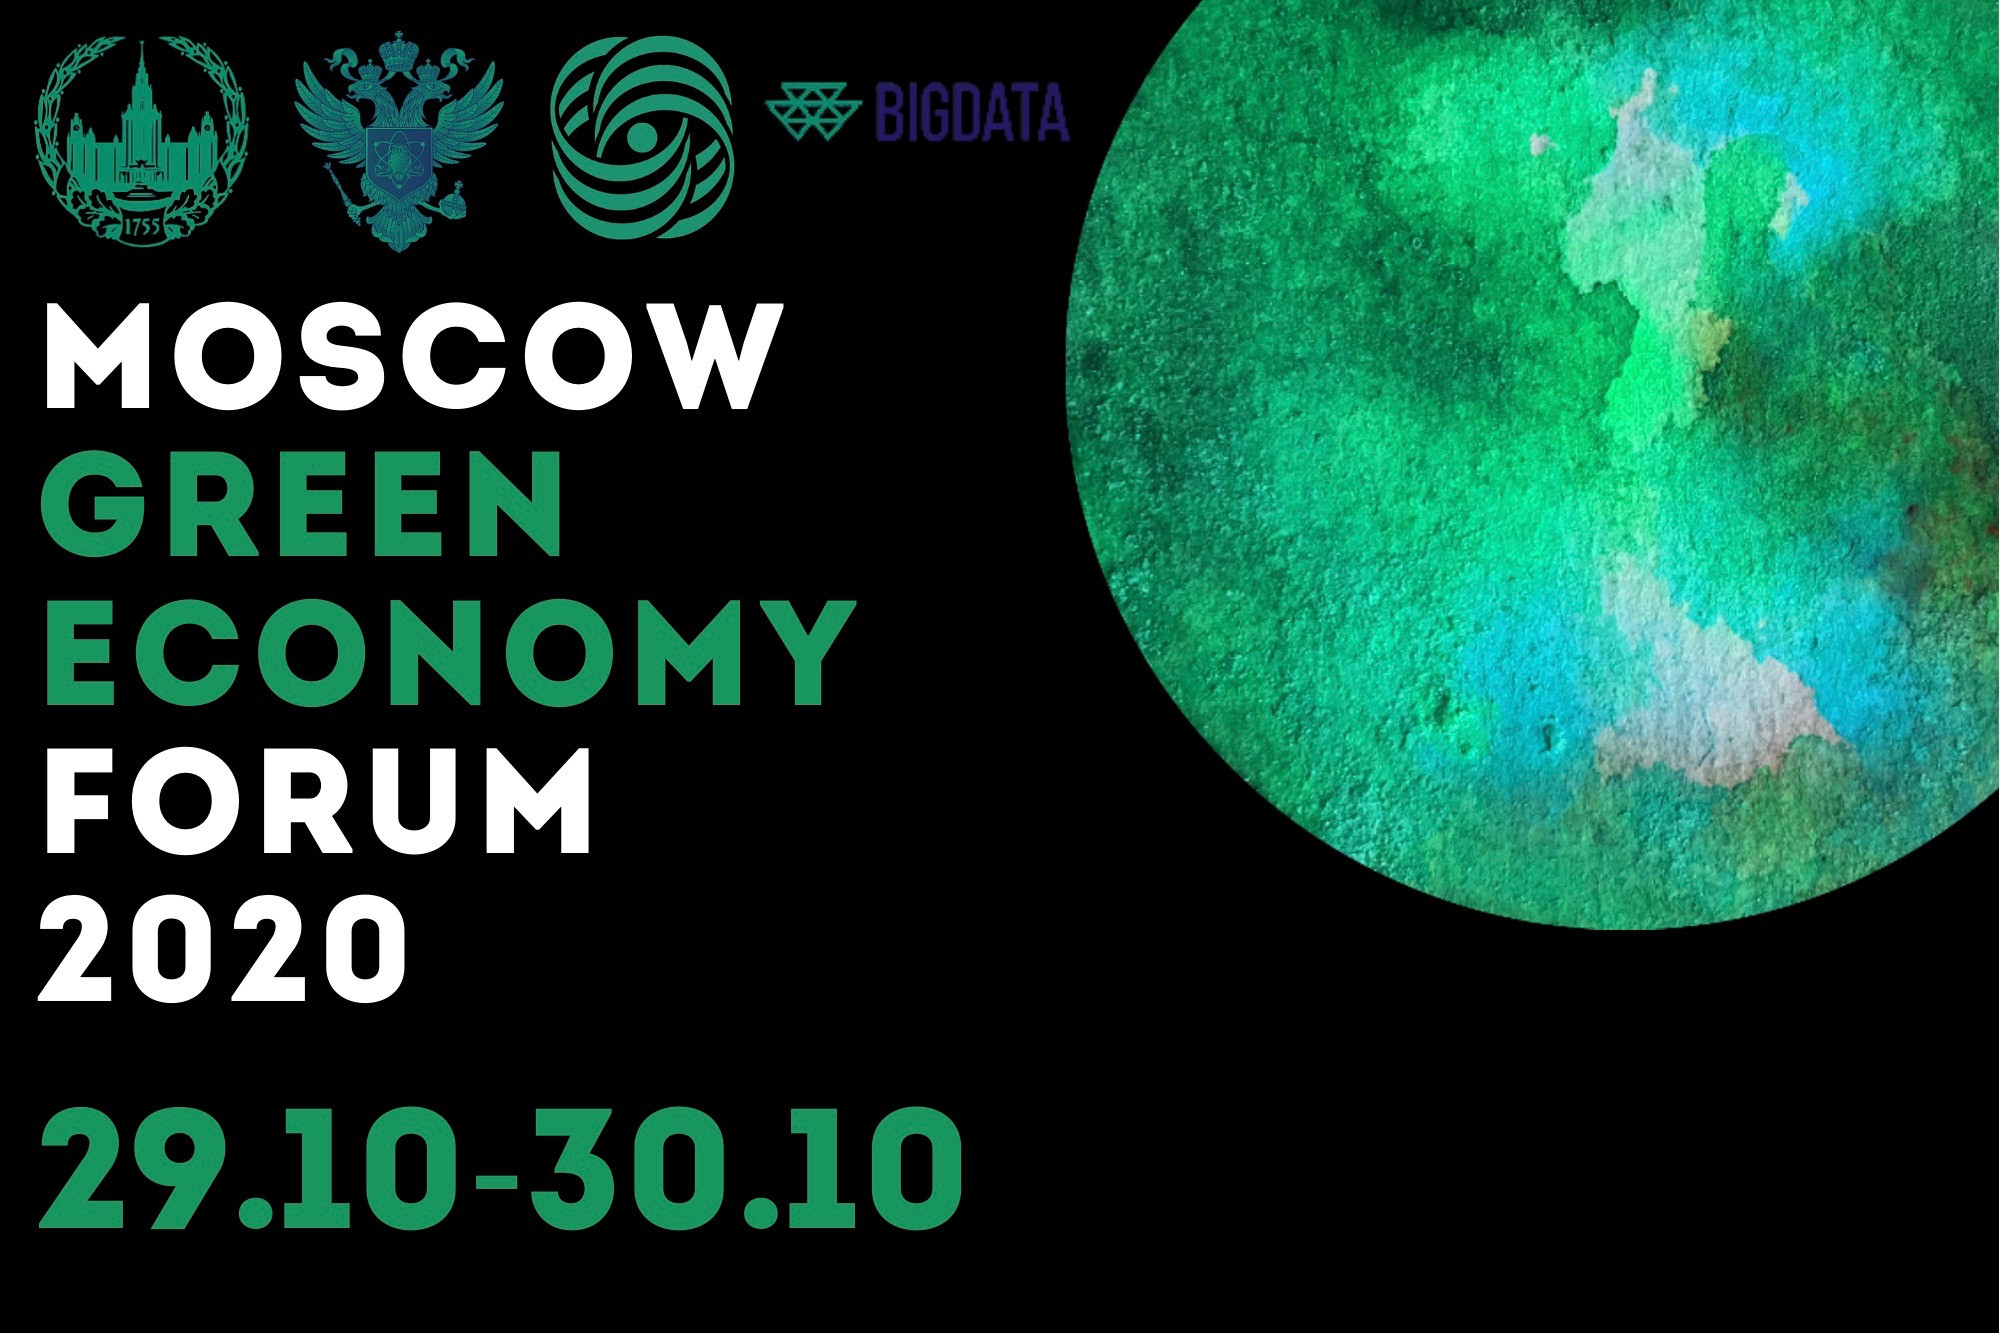 Moscow green economy forum 2020. МГУ. Центр компетенций НТИ по большим данным. НЦЦЭ МГУ